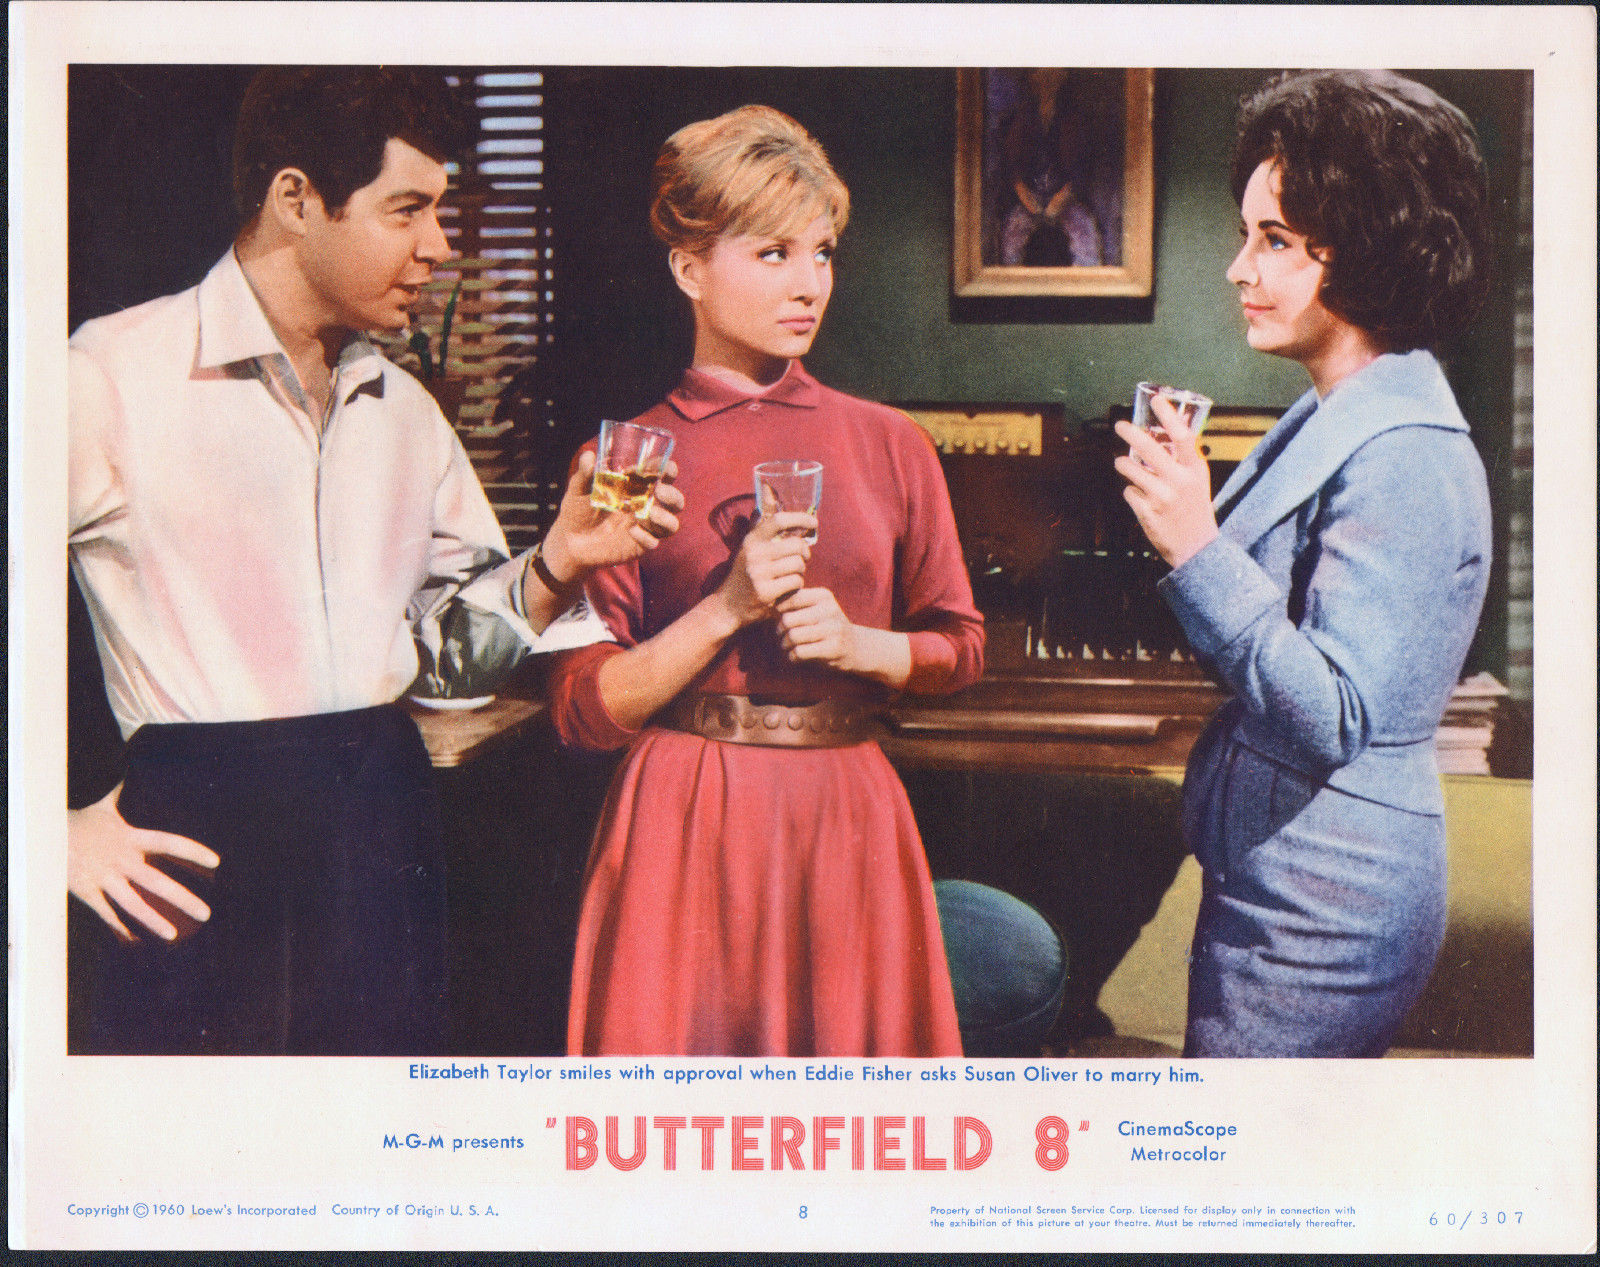 Susan Oliver with Eddie Fisher & Elizabeth Taylor (Butterfield 8 - 1960)